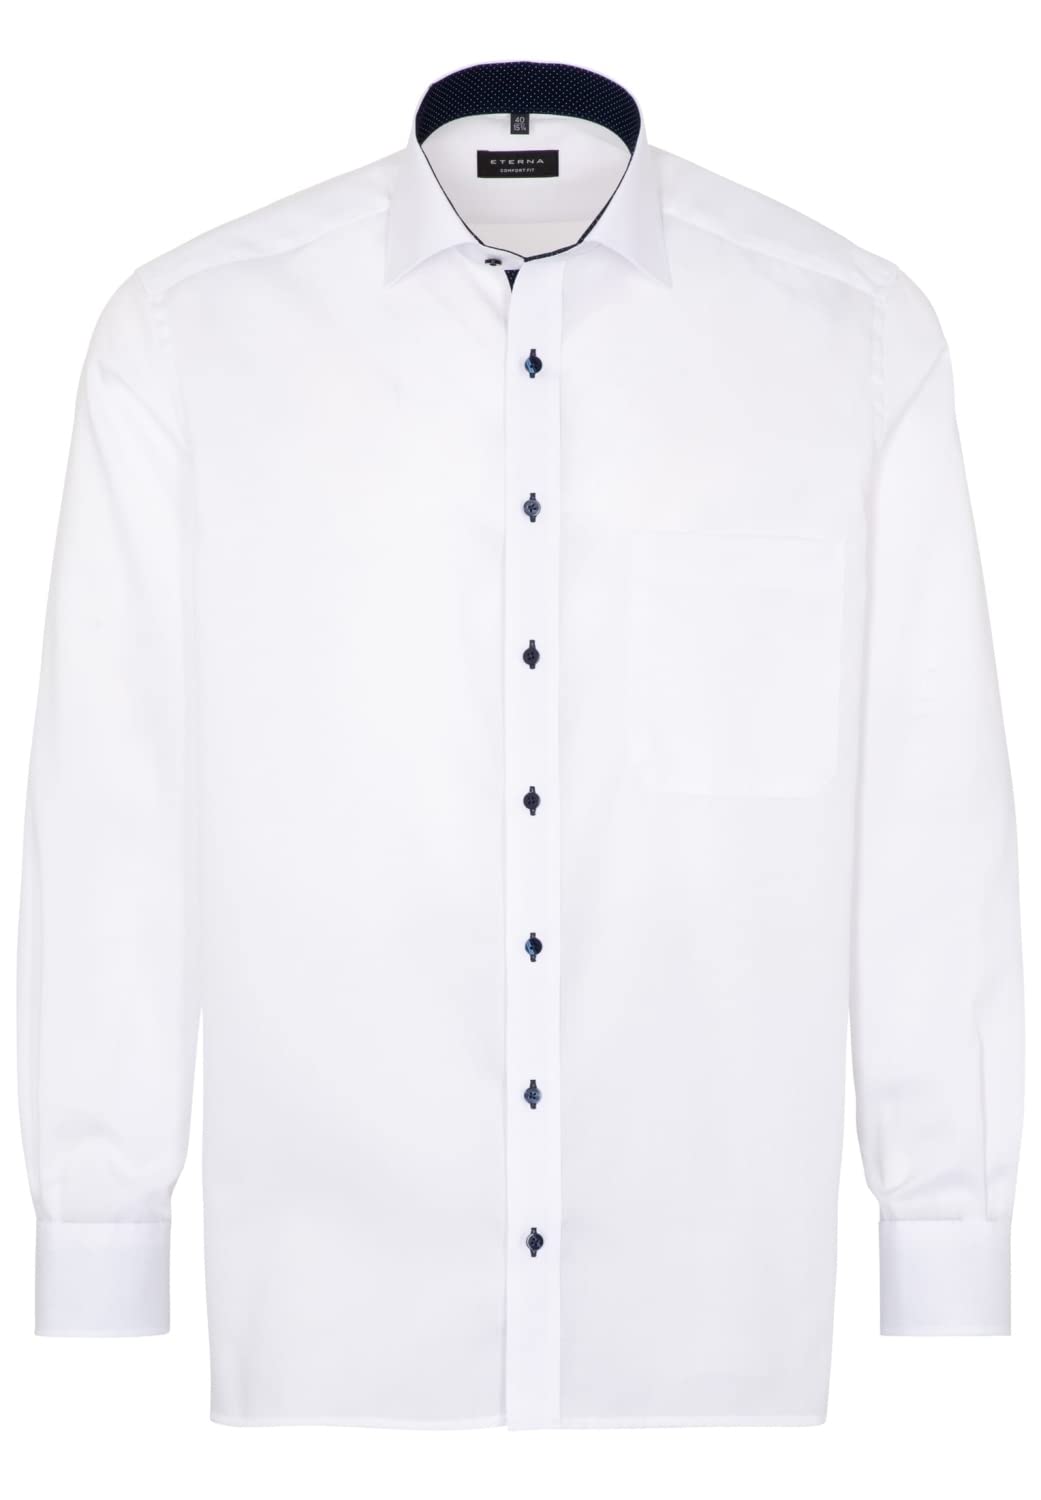 ETERNA Langarm Hemd COMFORT FIT Pinpoint unifarben mit Classic Kent Kragen- Gr. 46 EU, Weiß